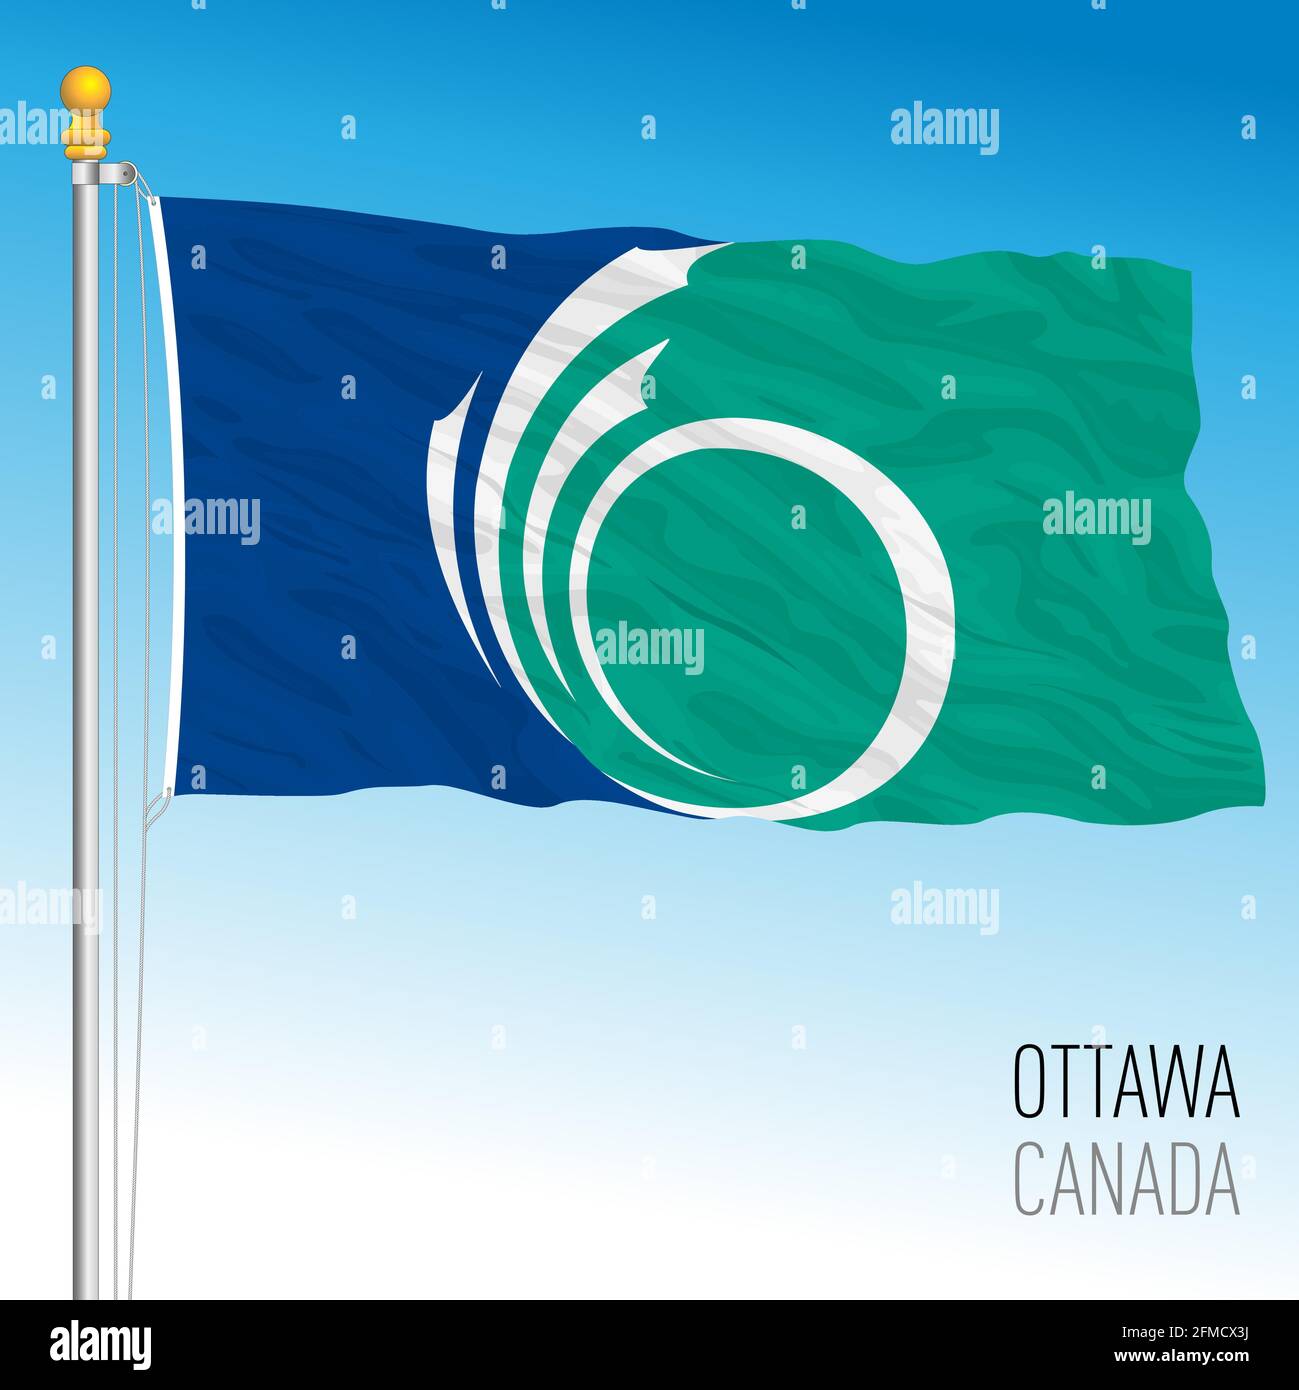 Ottawa City flag, Canada, north american country, vector illustration Stock Vector